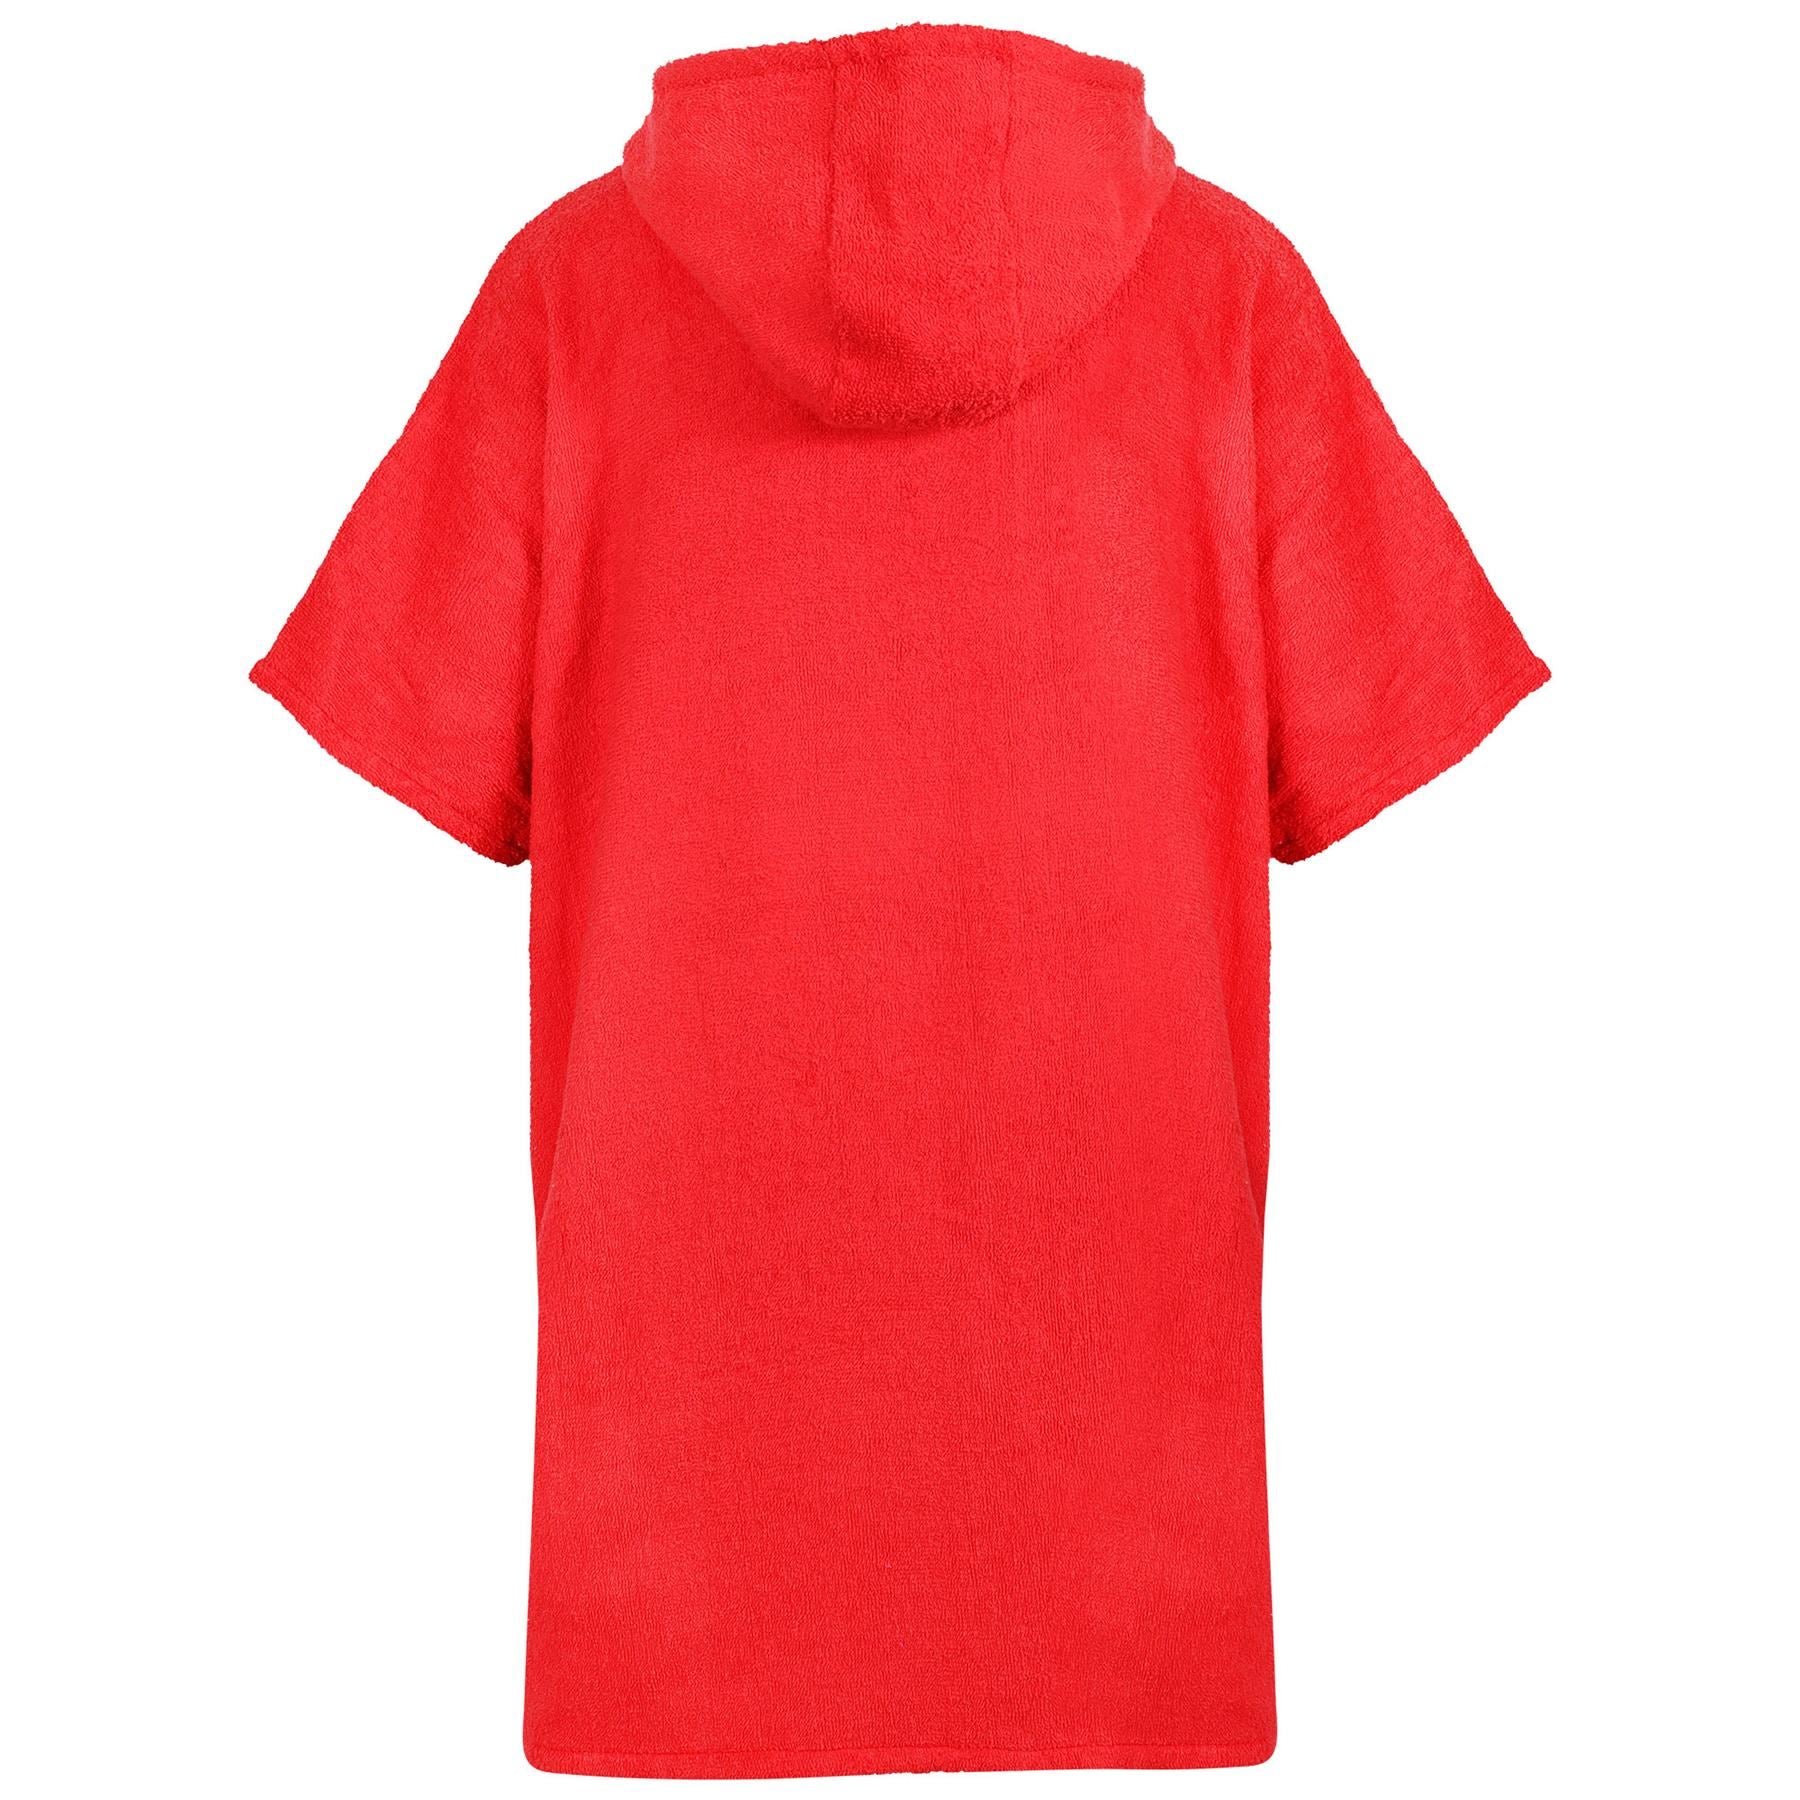 Kids Bathrobe 100% Cotton Red Hooded Bathing Dressing Gown Unisex 2-13 Yrs